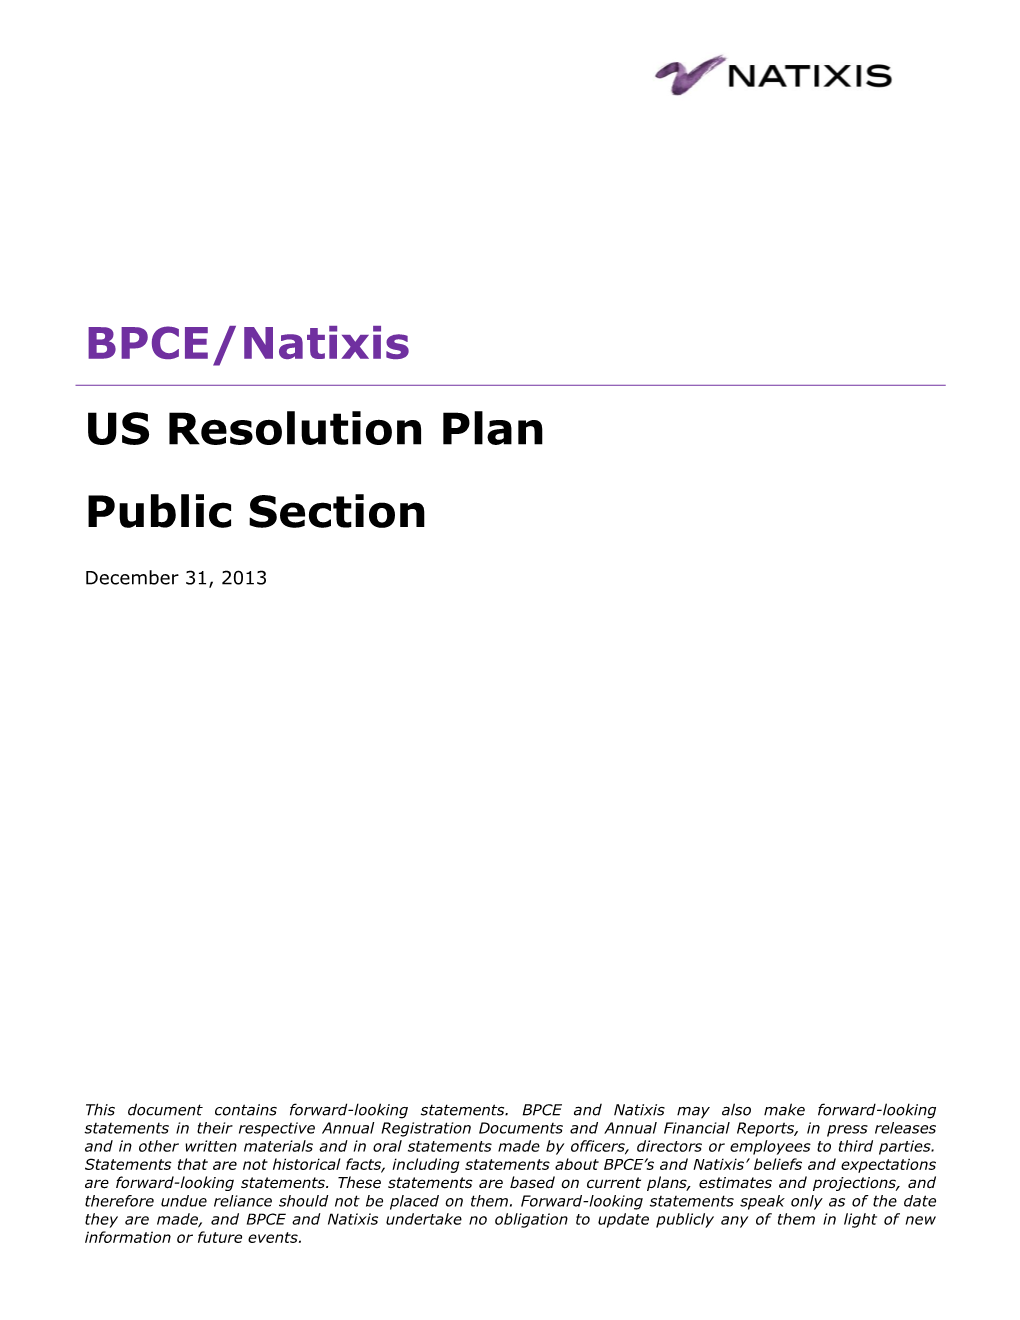 BPCE/Natixis US Resolution Plan